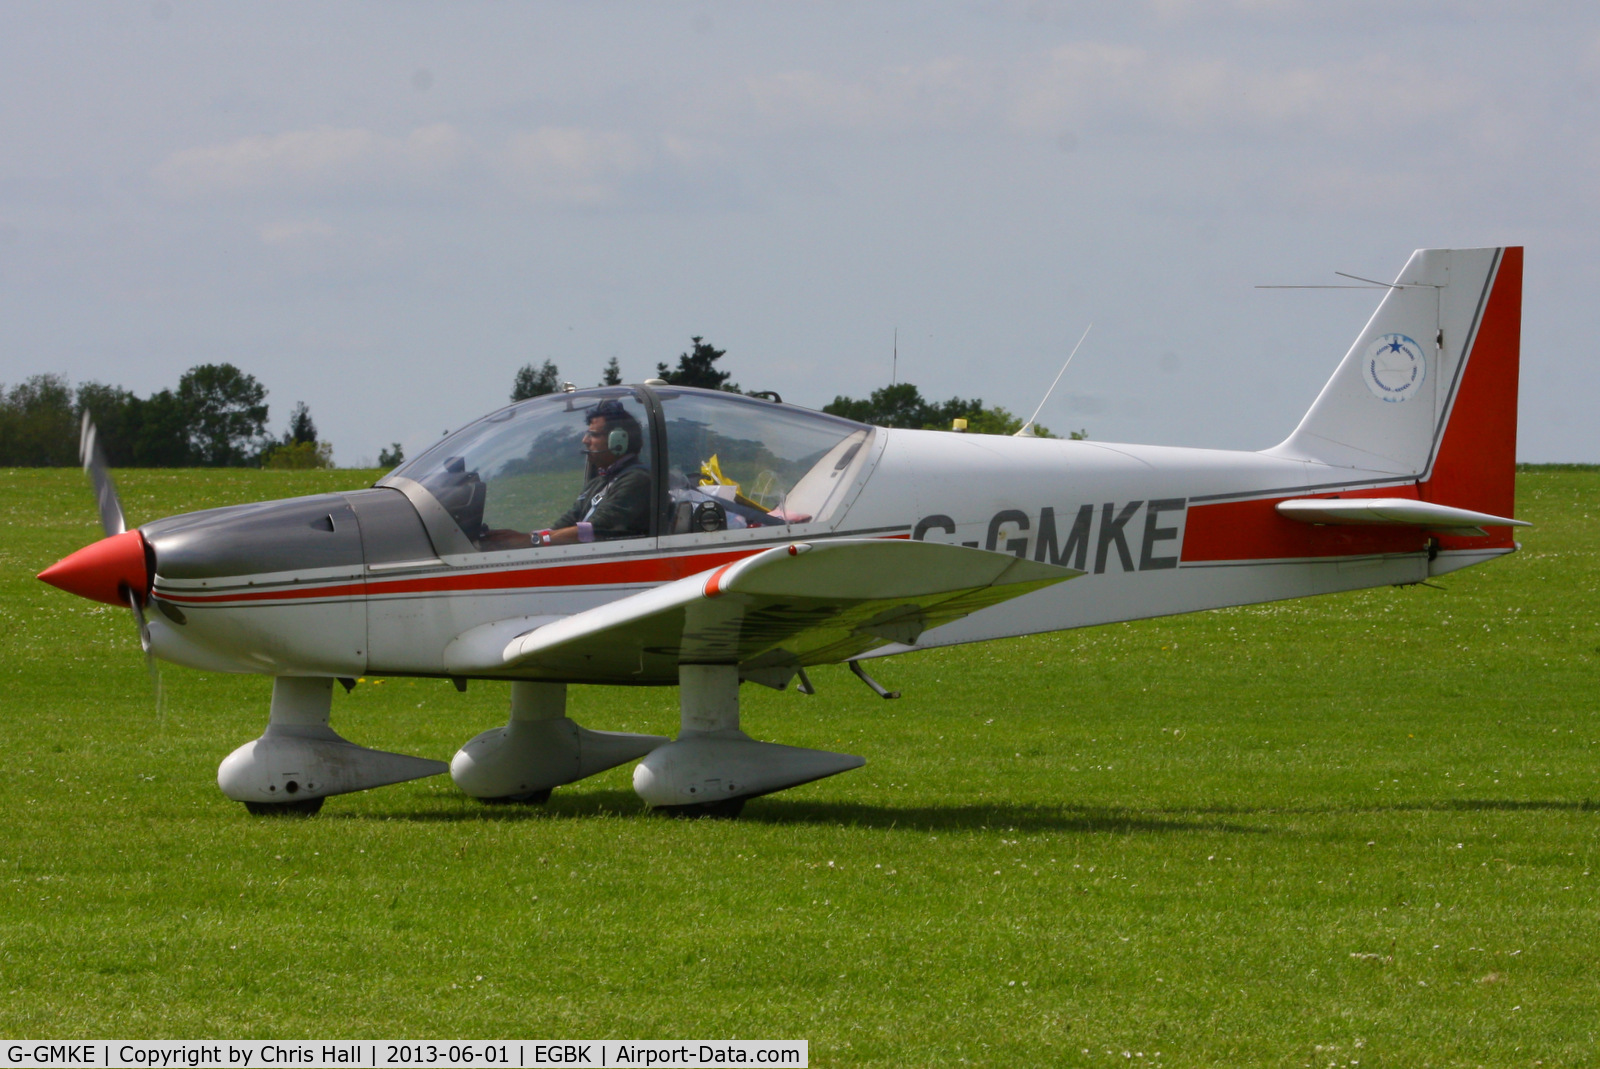 G-GMKE, 1993 Robin HR-200-120B C/N 257, at AeroExpo 2013